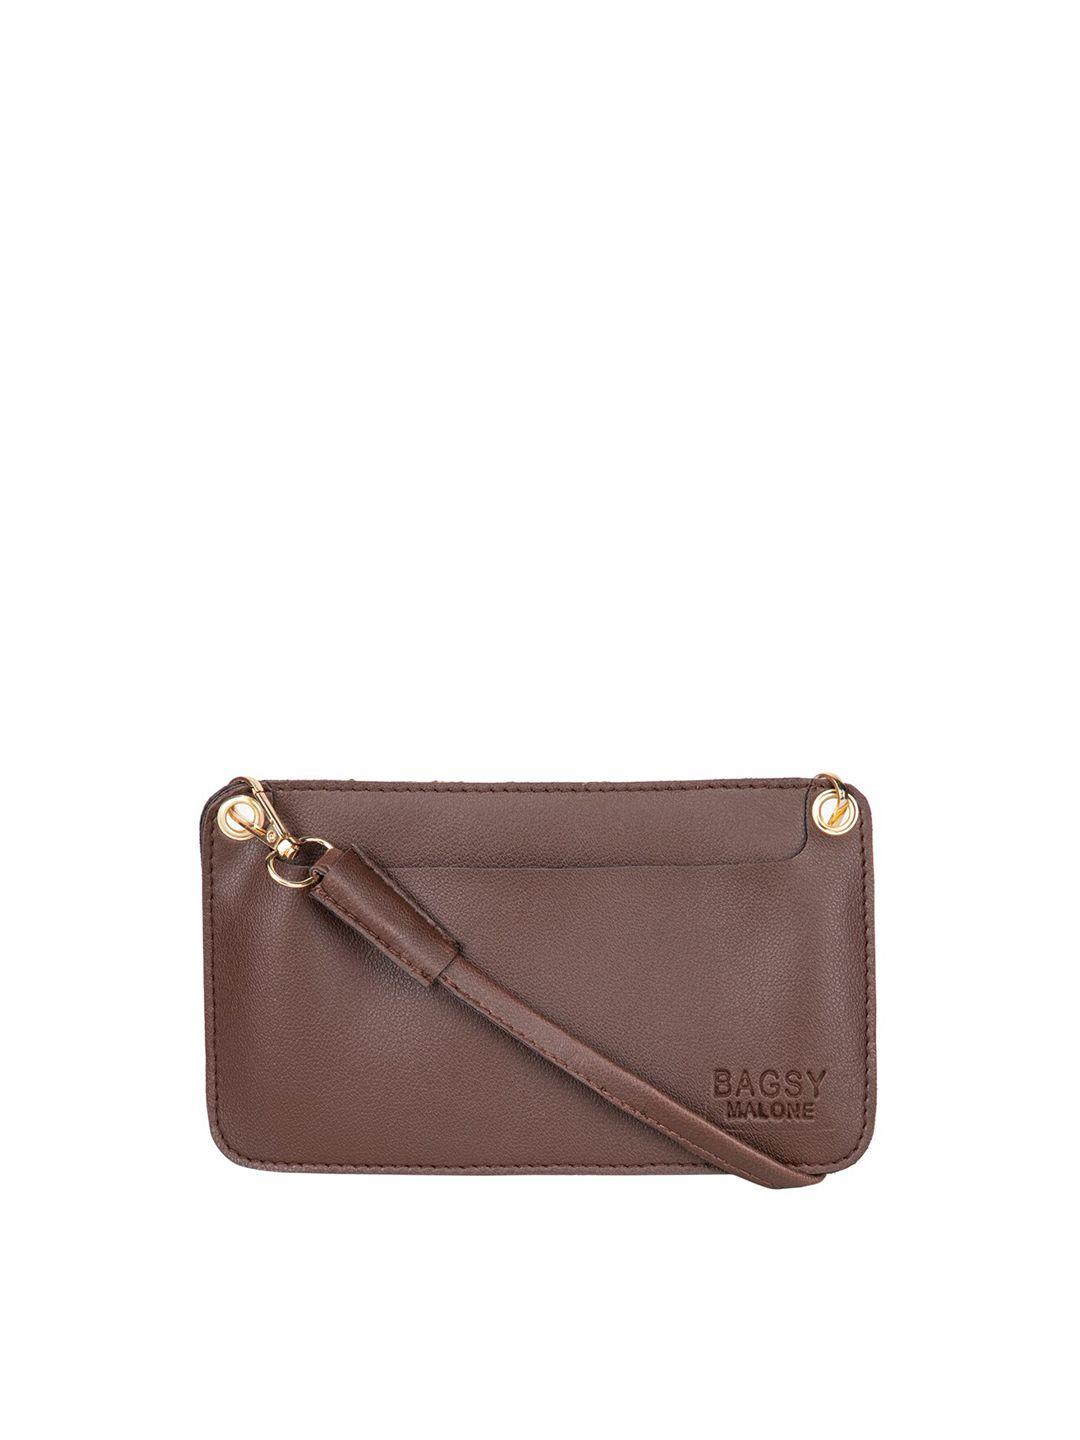 bagsy malone women zip detail purse clutch